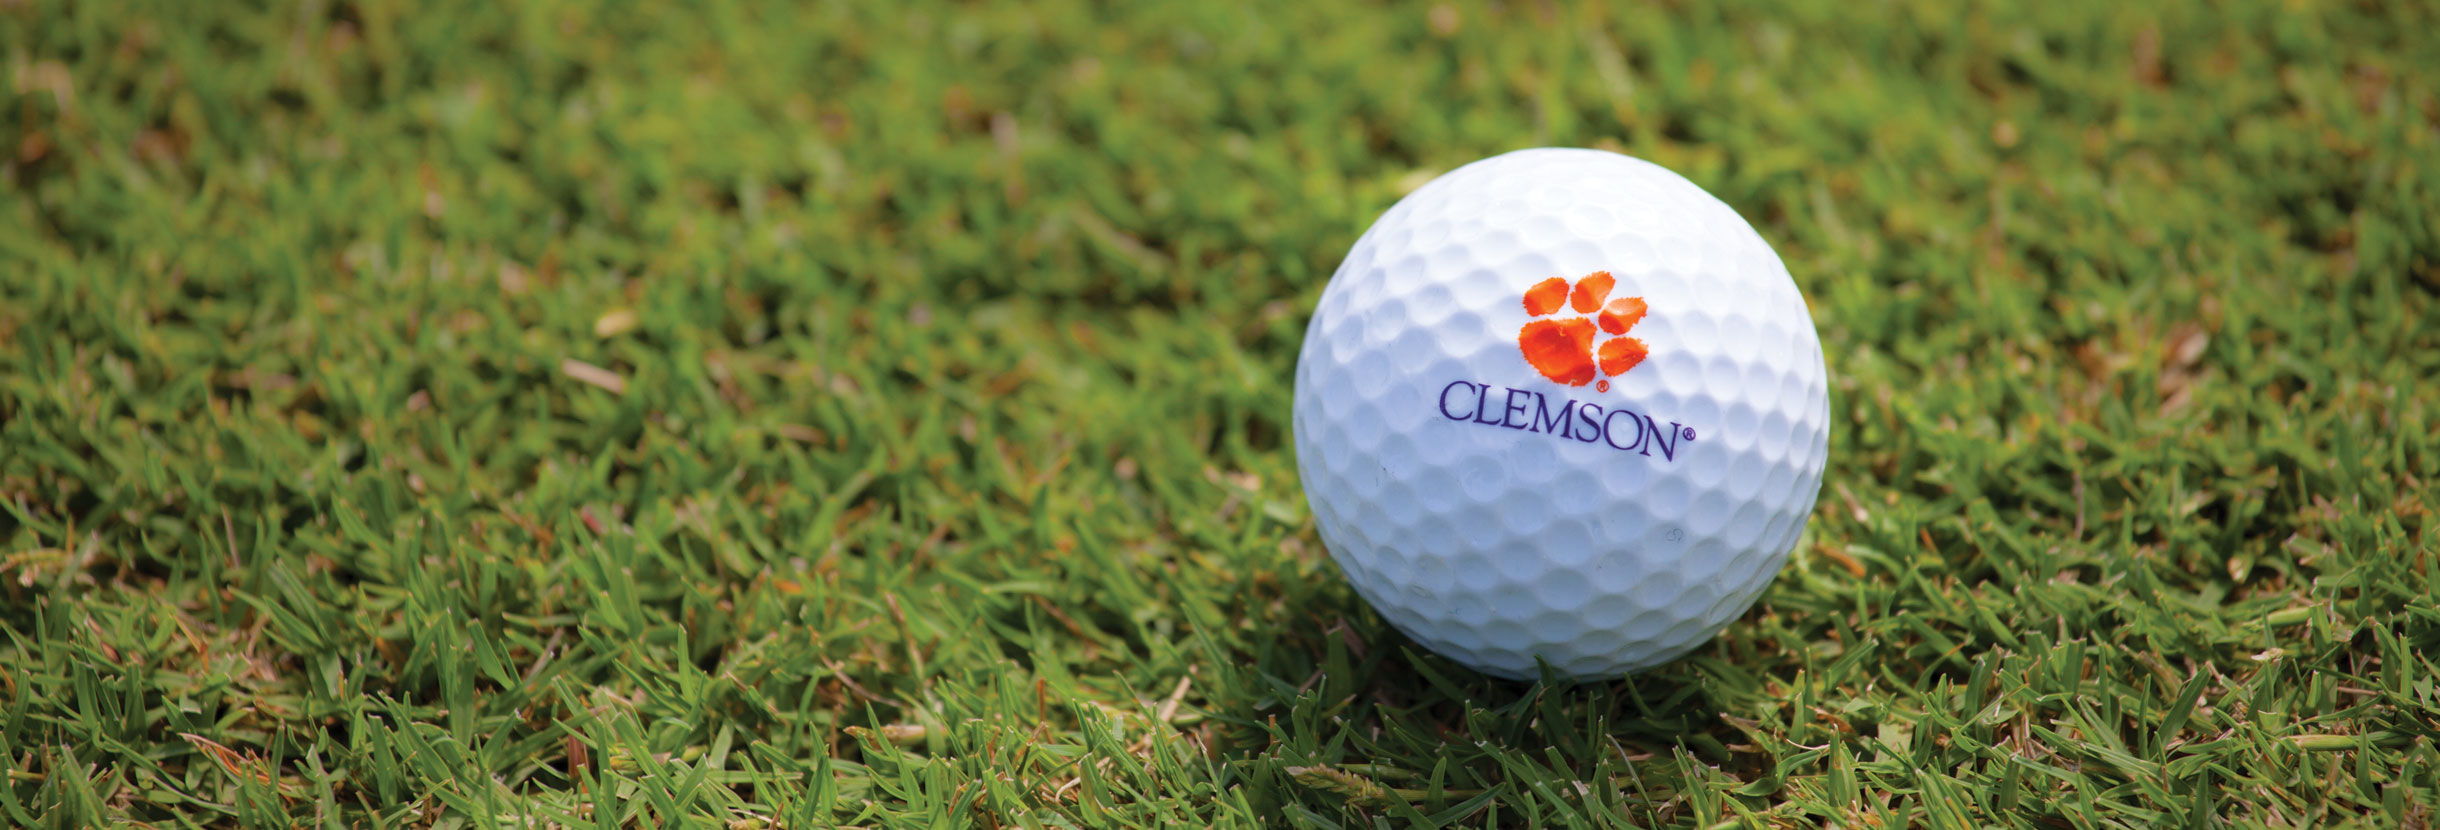 Clemson golf ball sitting in green turf